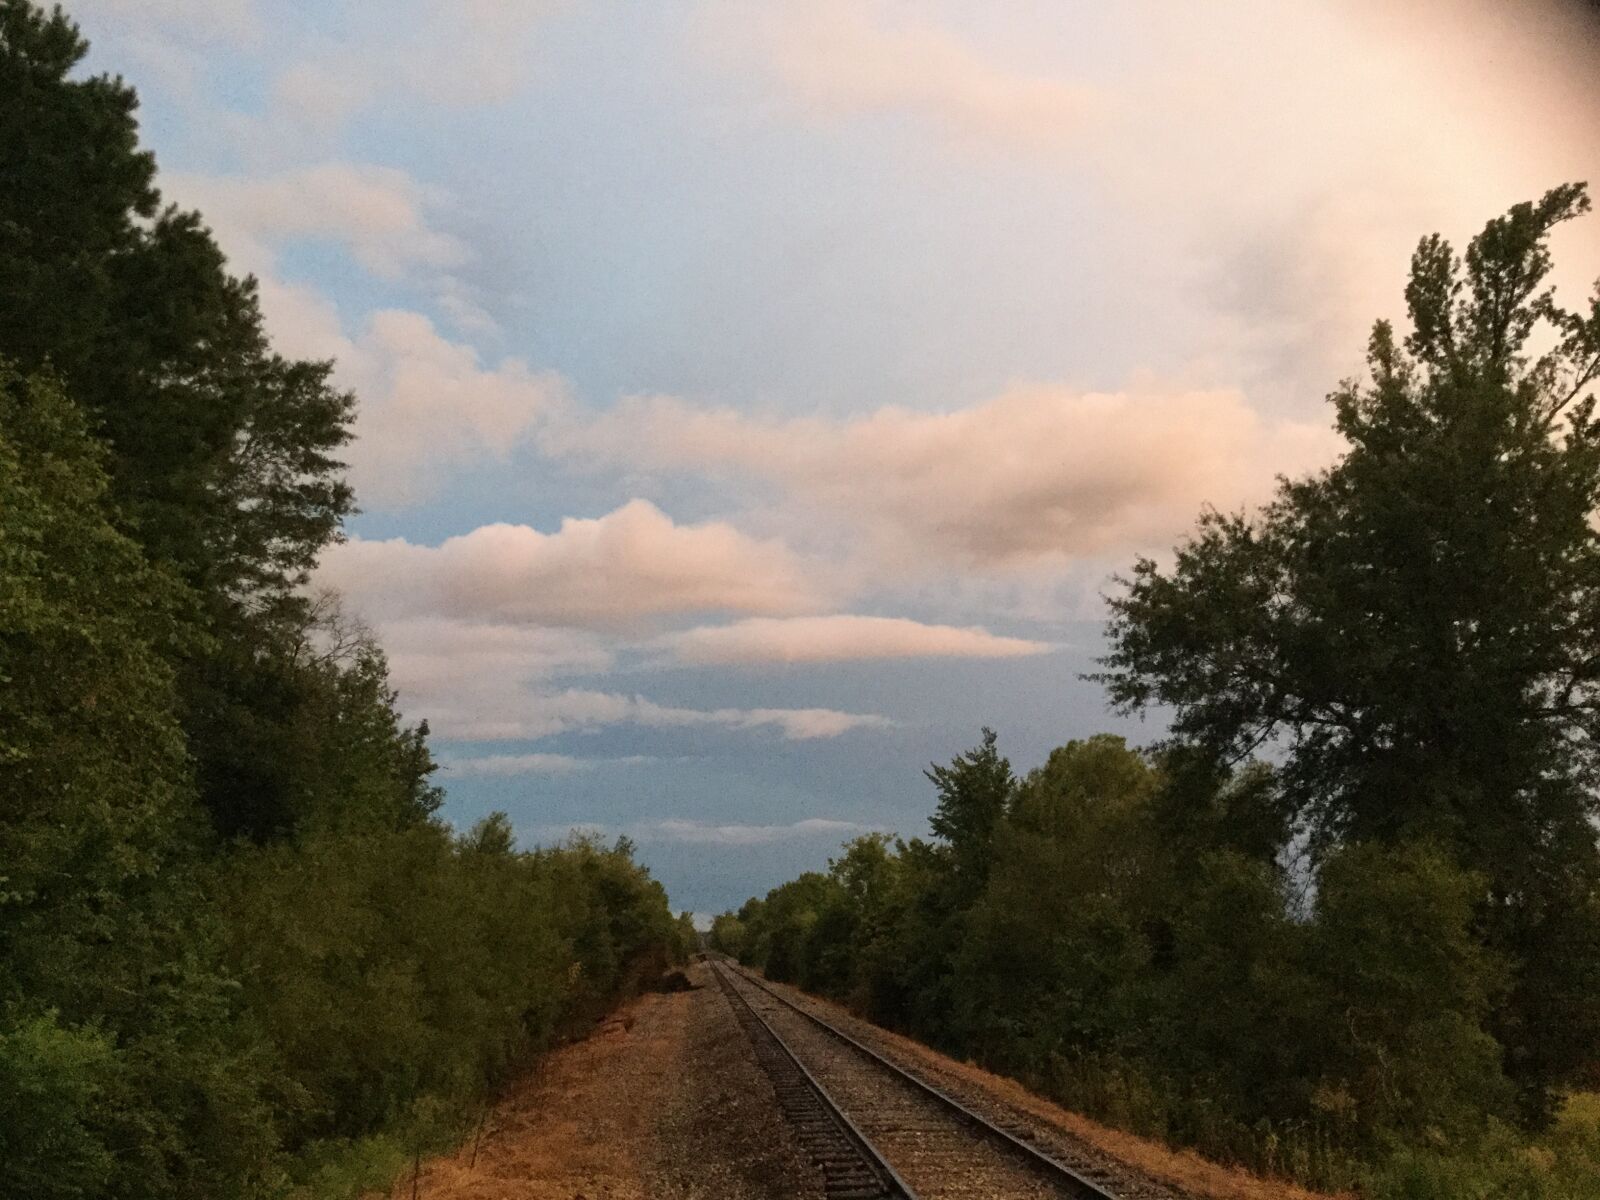 iPad mini 4 back camera 3.3mm f/2.4 sample photo. Sunset, trees, railroad photography